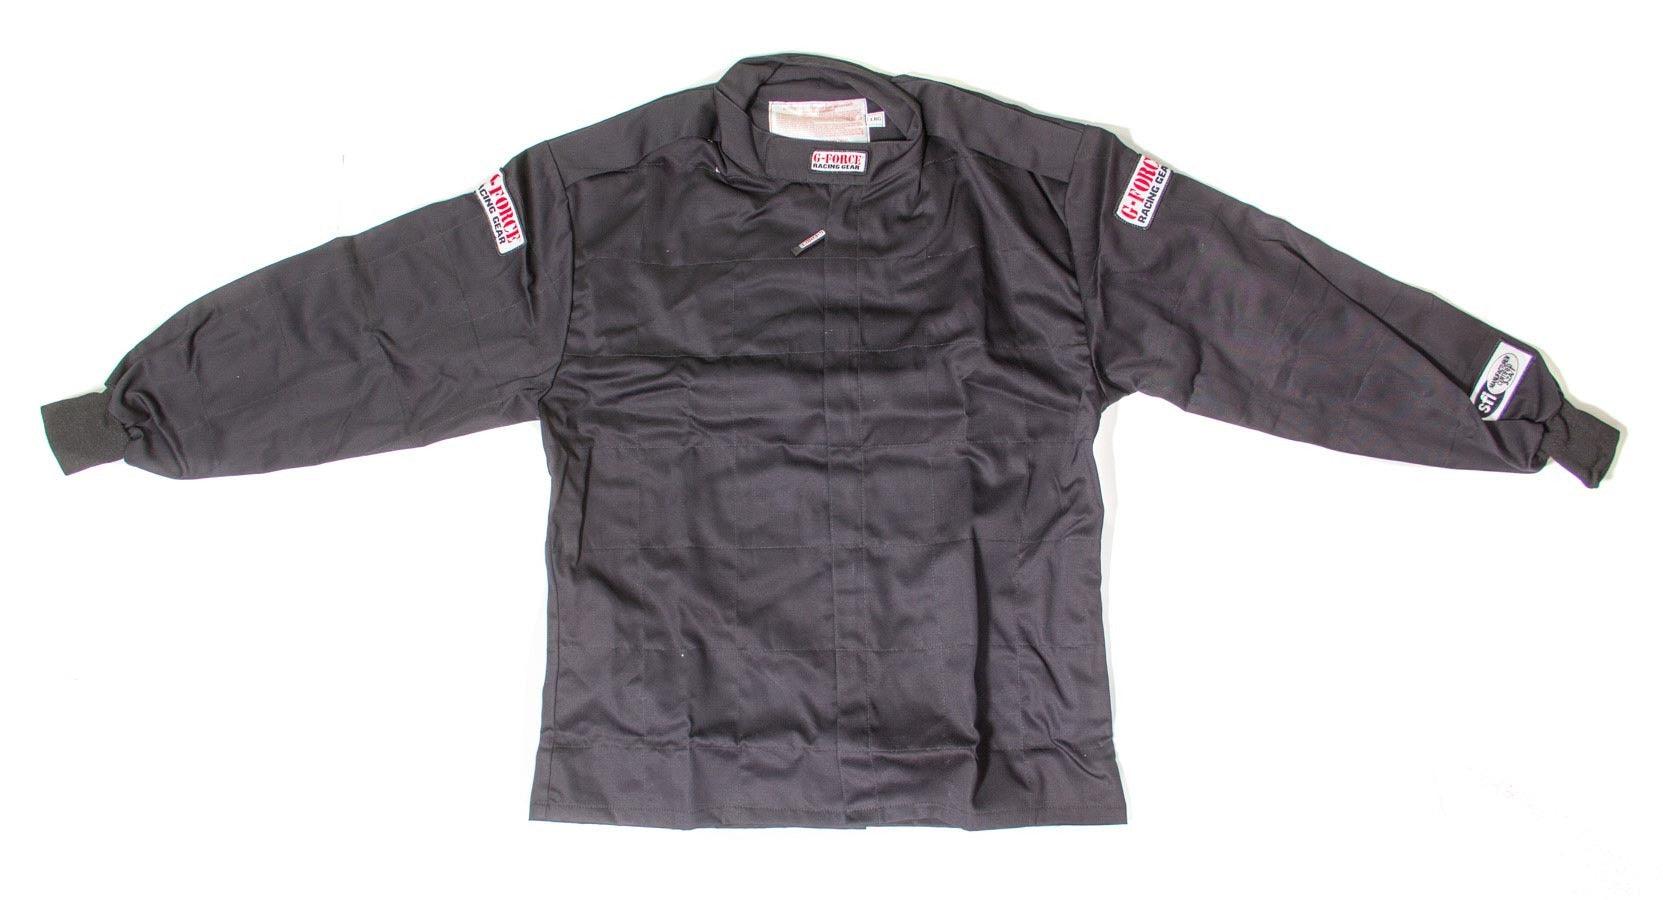 GF125 Jacket Only Large Black - Burlile Performance Products